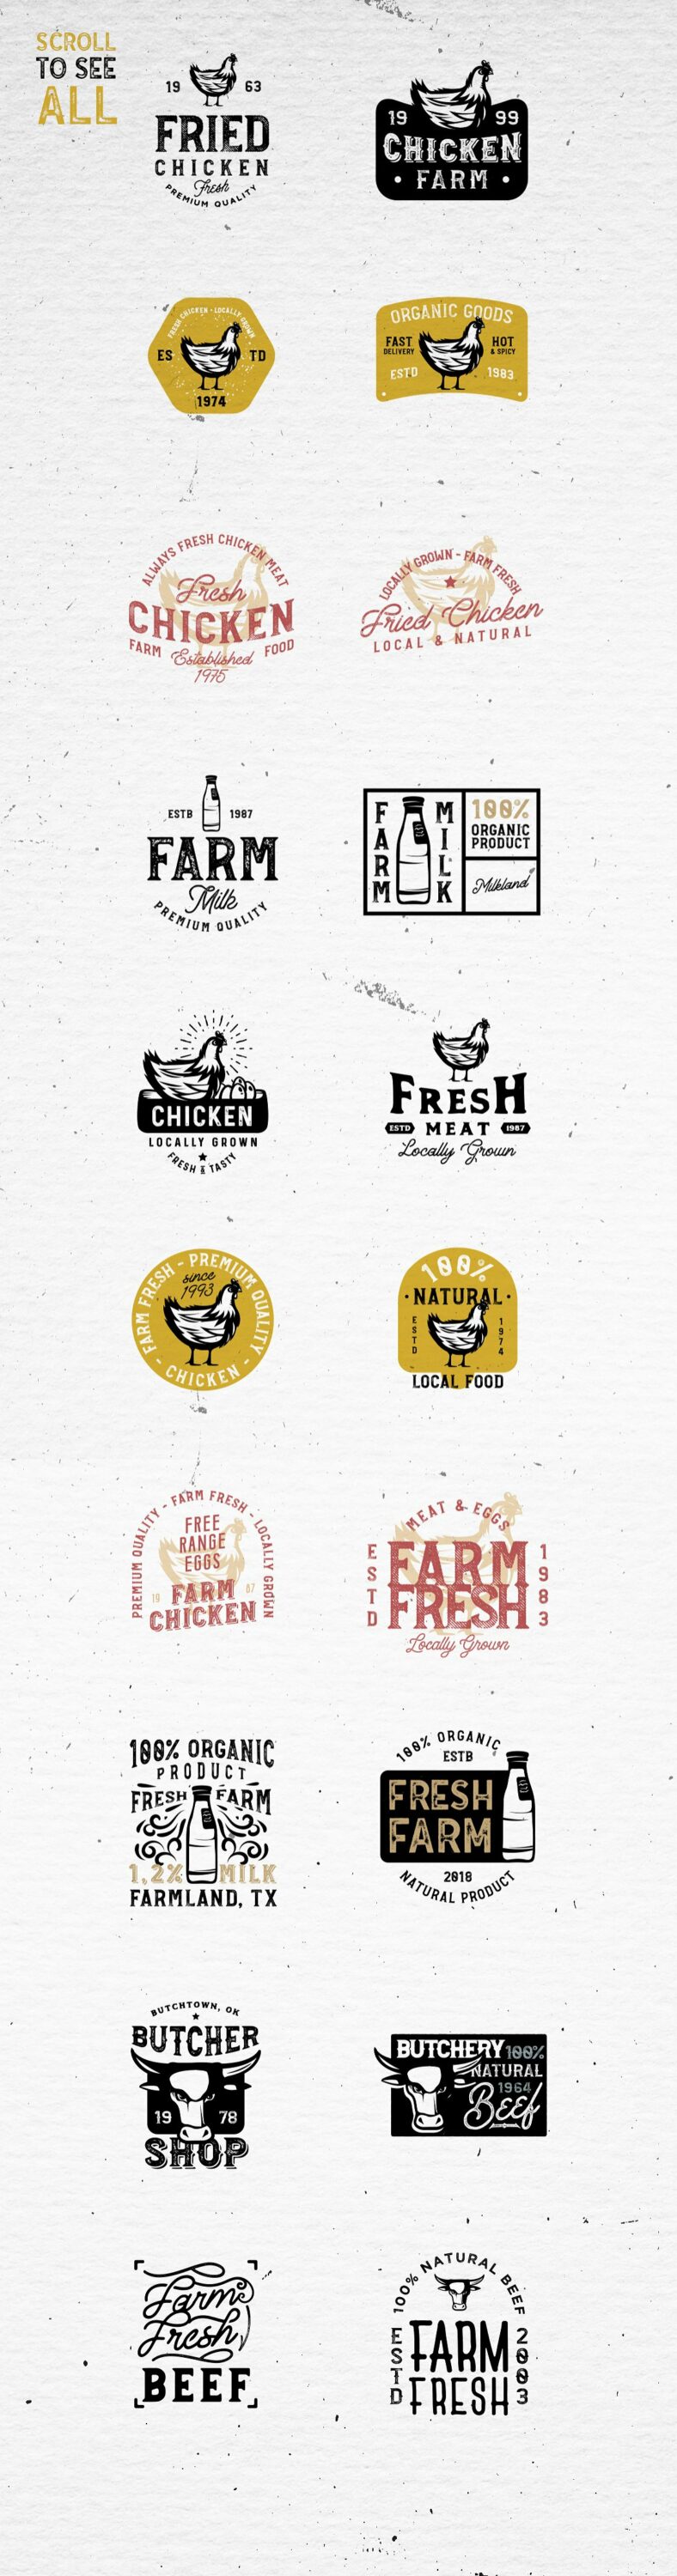 Big vintafe logo collection foe different farm industries.